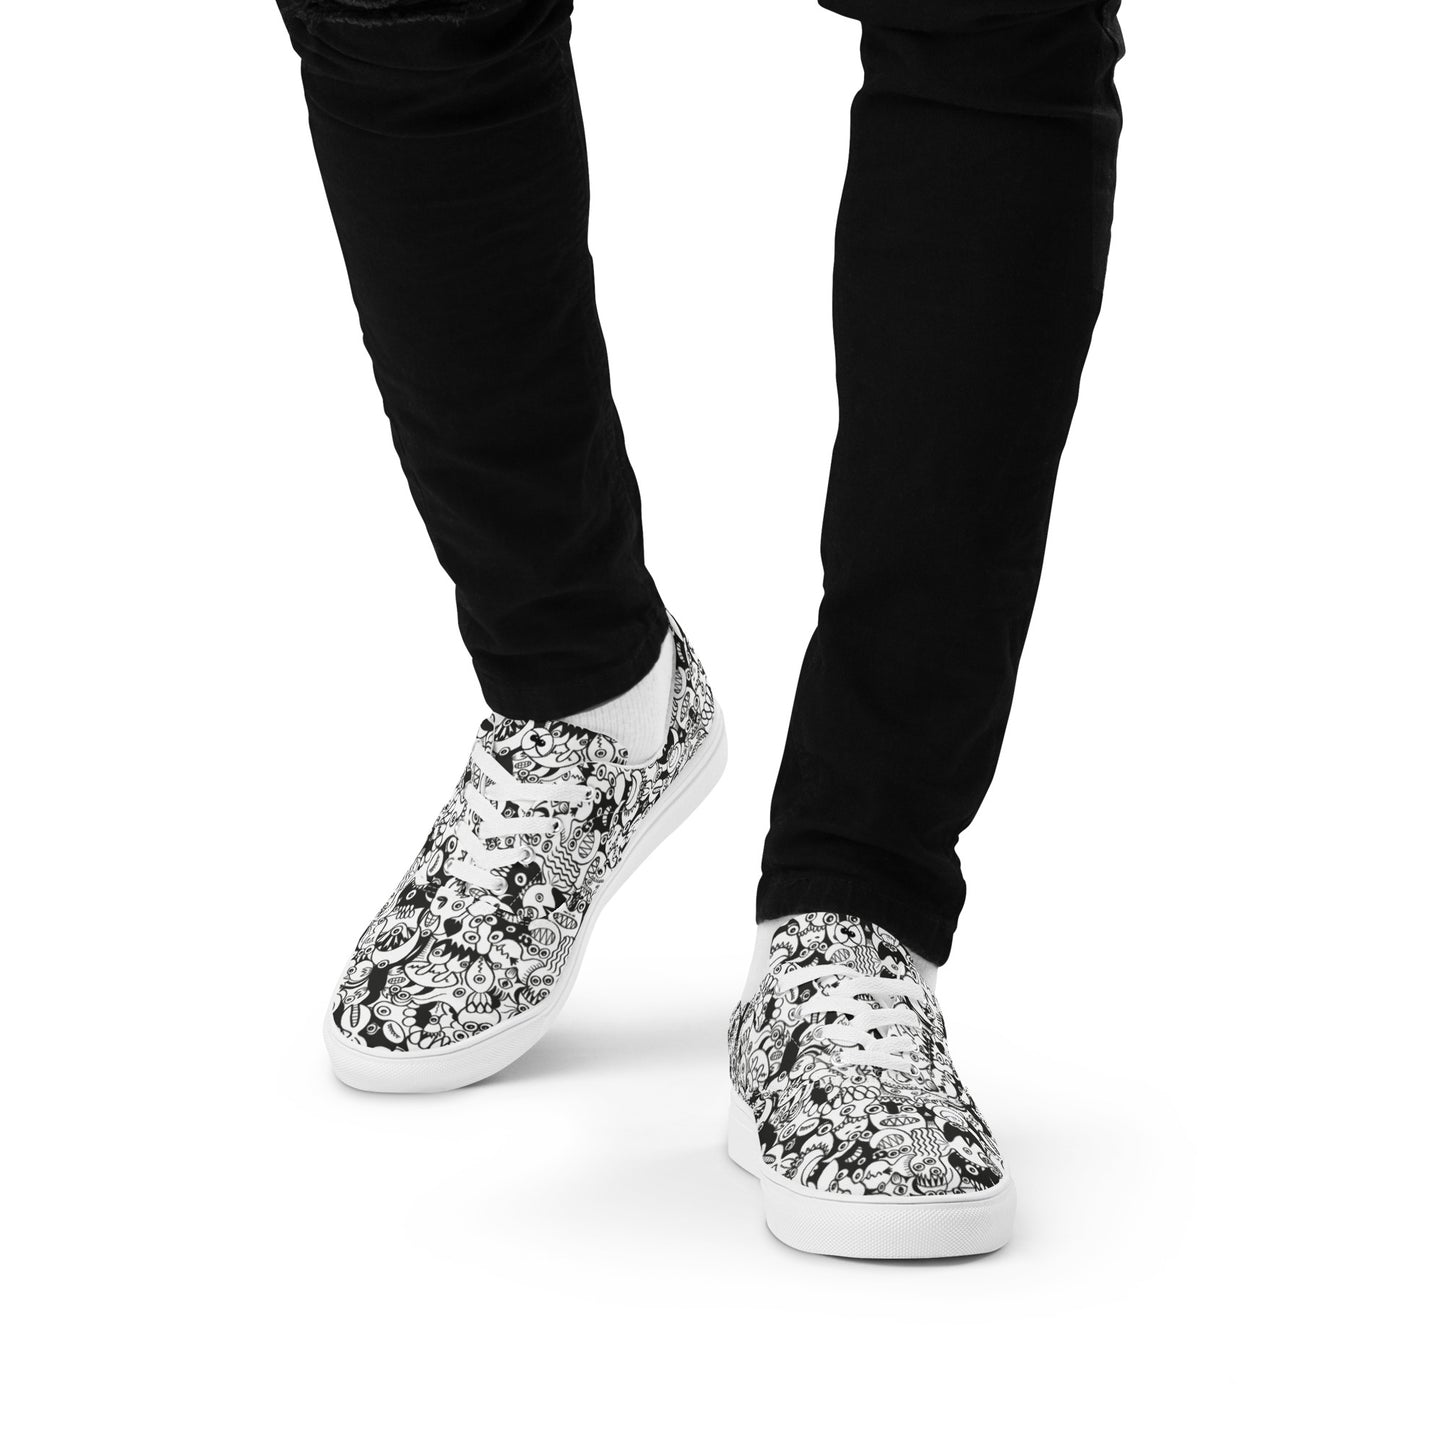 Black and white cool doodles art Men’s lace-up canvas shoes. Lifestyle